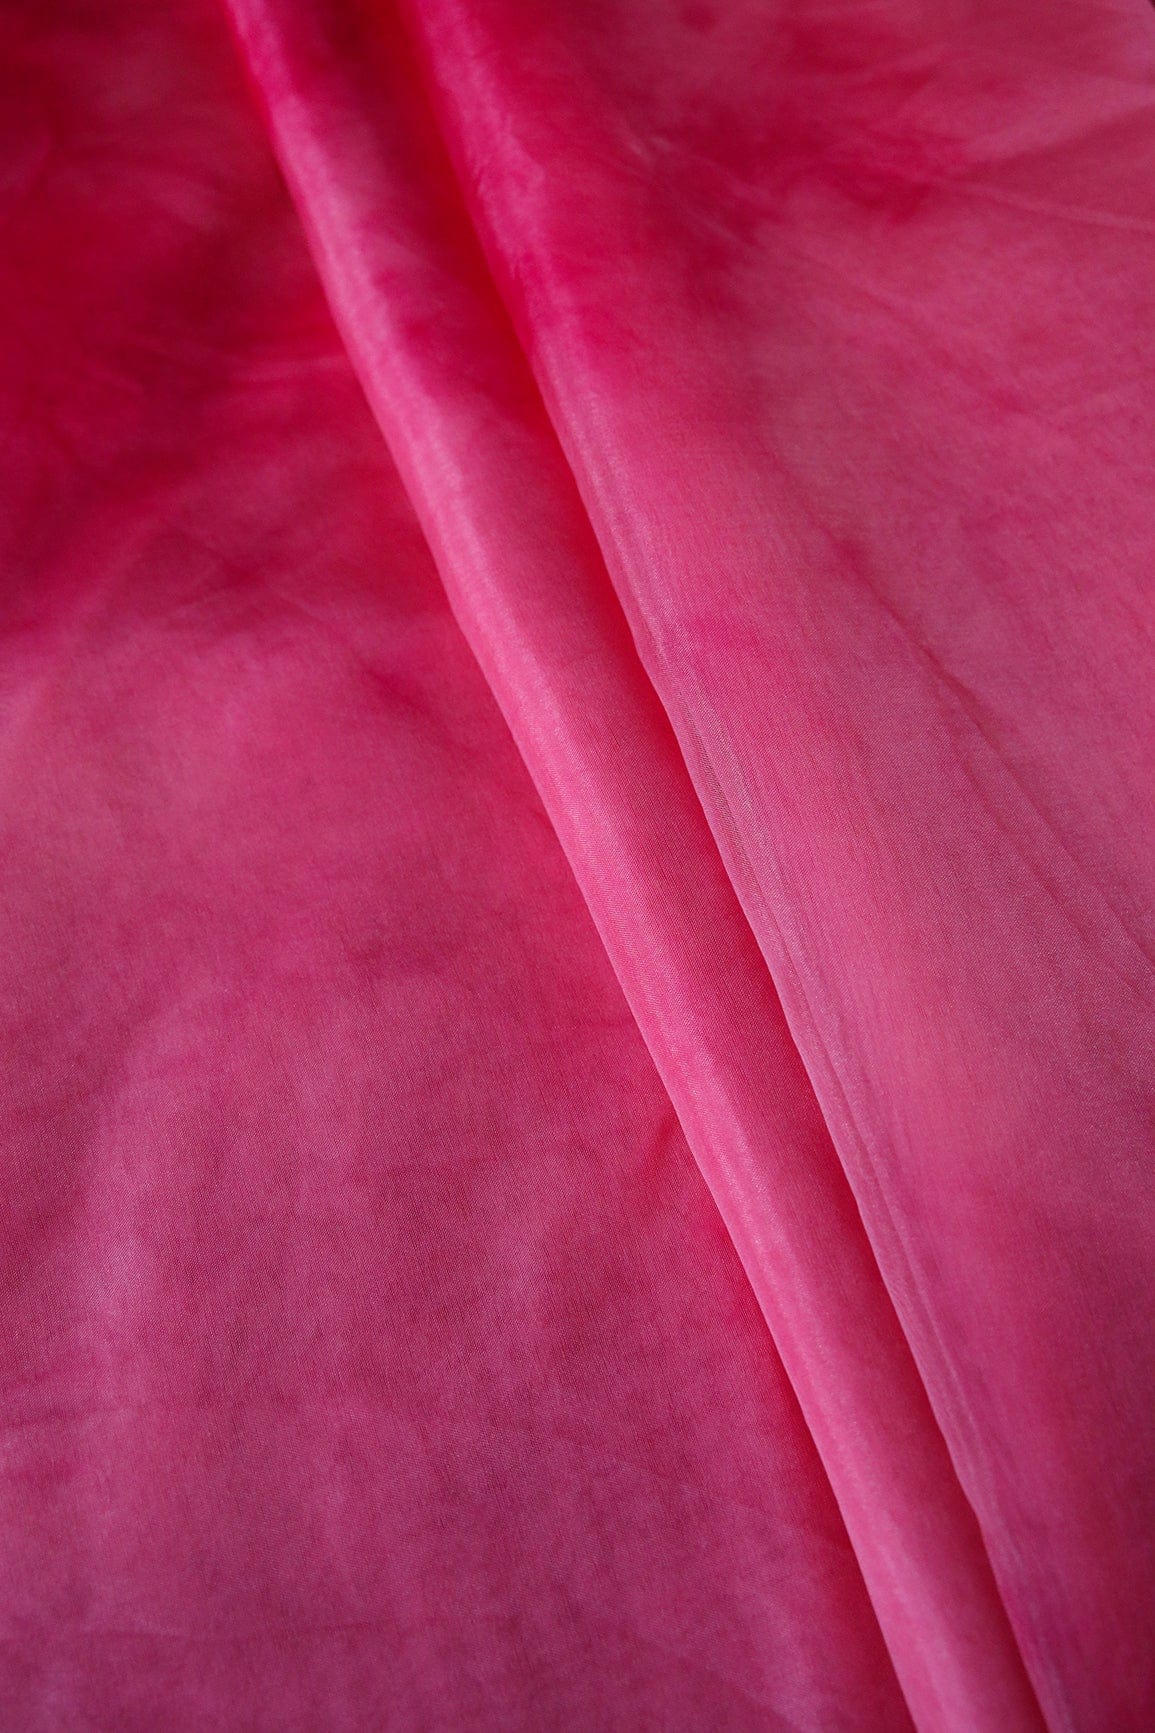 doeraa Prints Pink Tie & Dye Shibori Print On Organza Fabric